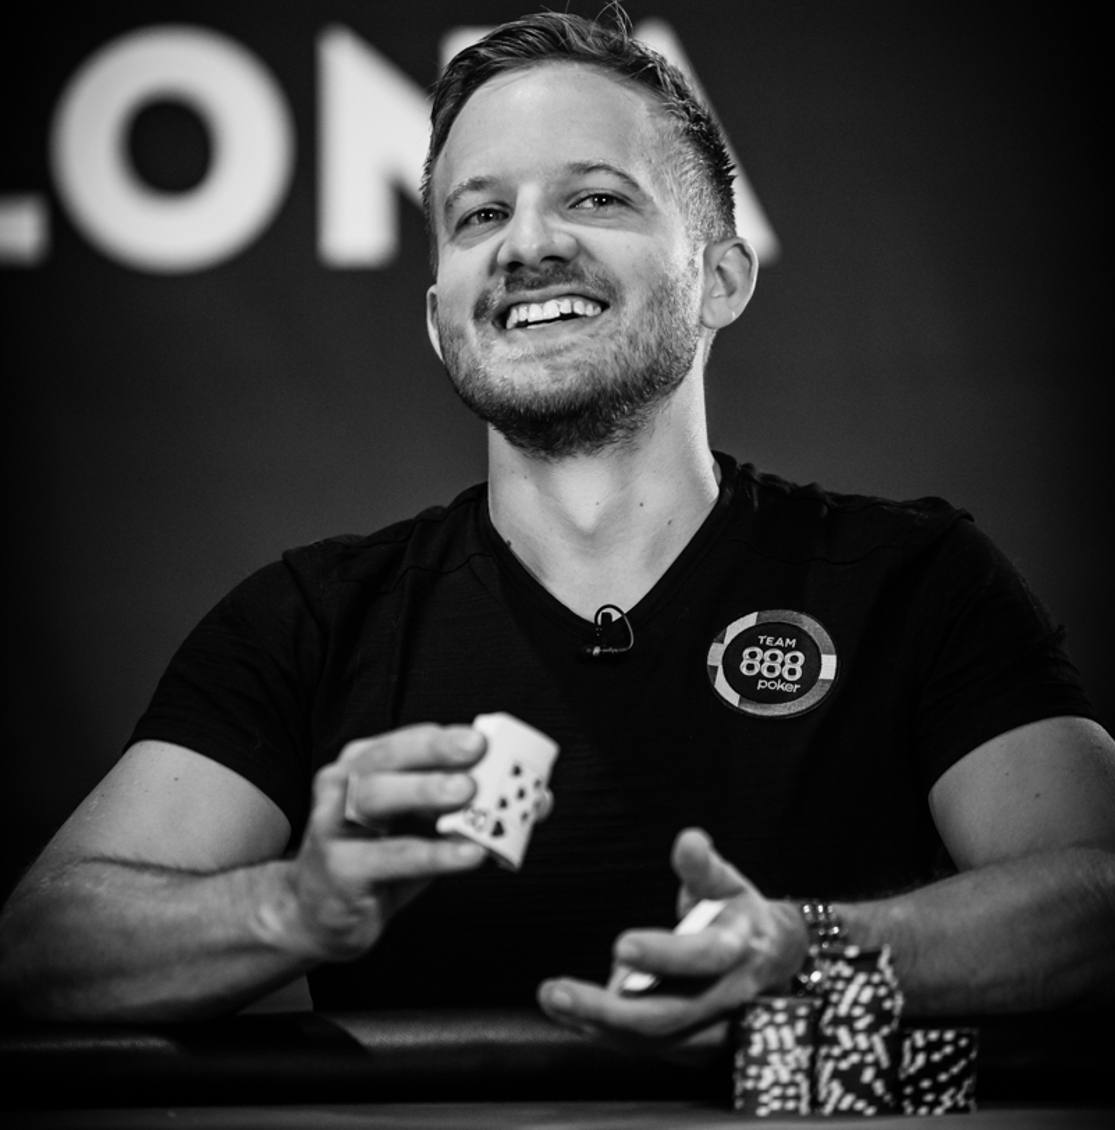 888poker Ambassador and 2014 Main Event champion Martin Jacobson